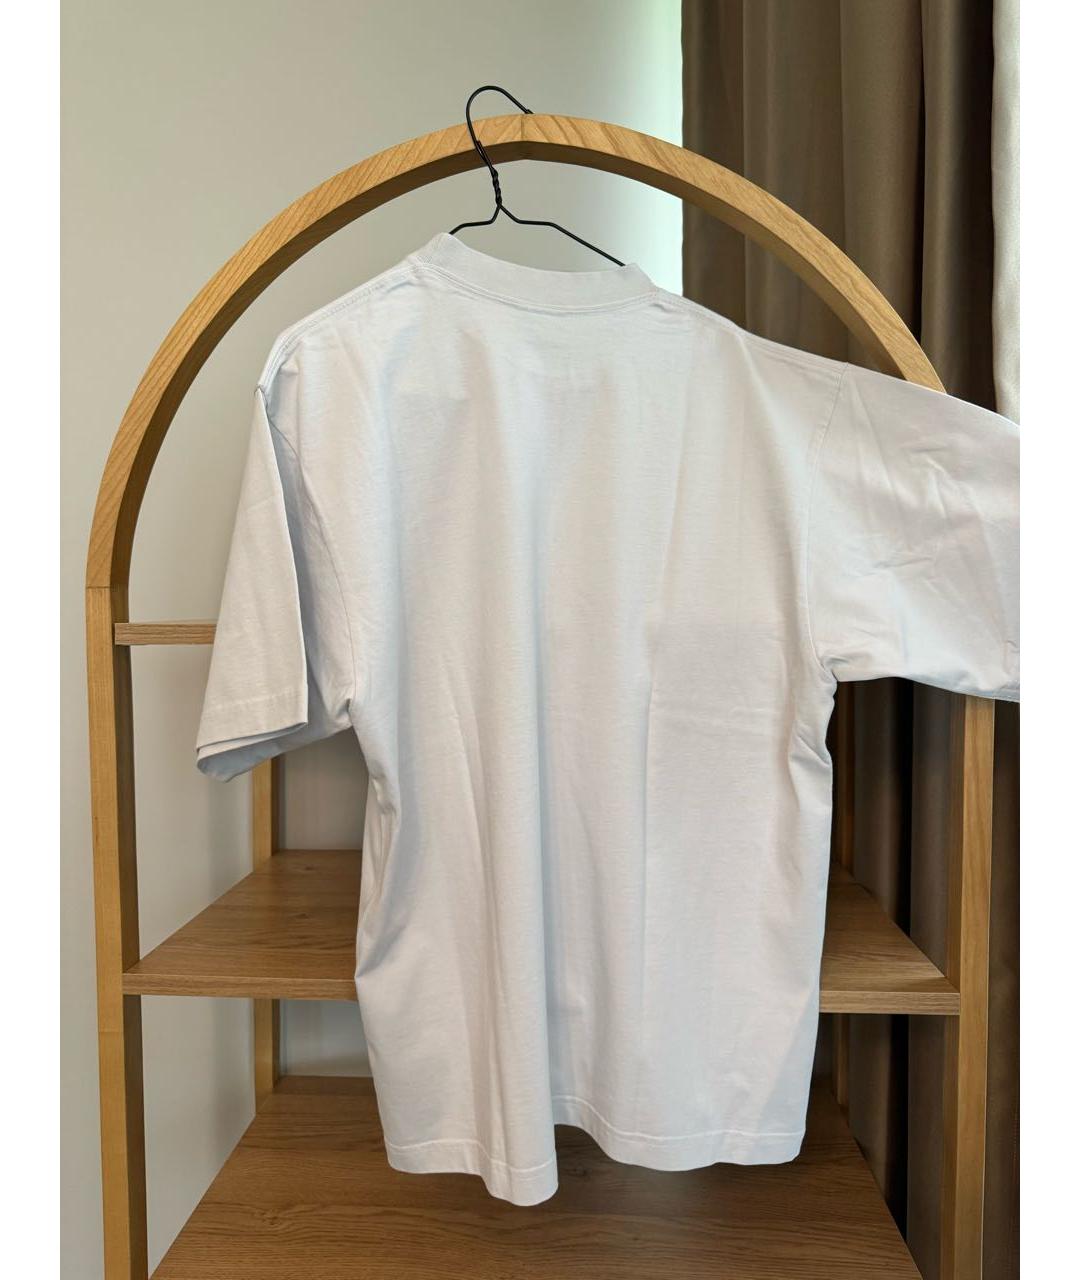 BALENCIAGA Белая хлопковая футболка, фото 3